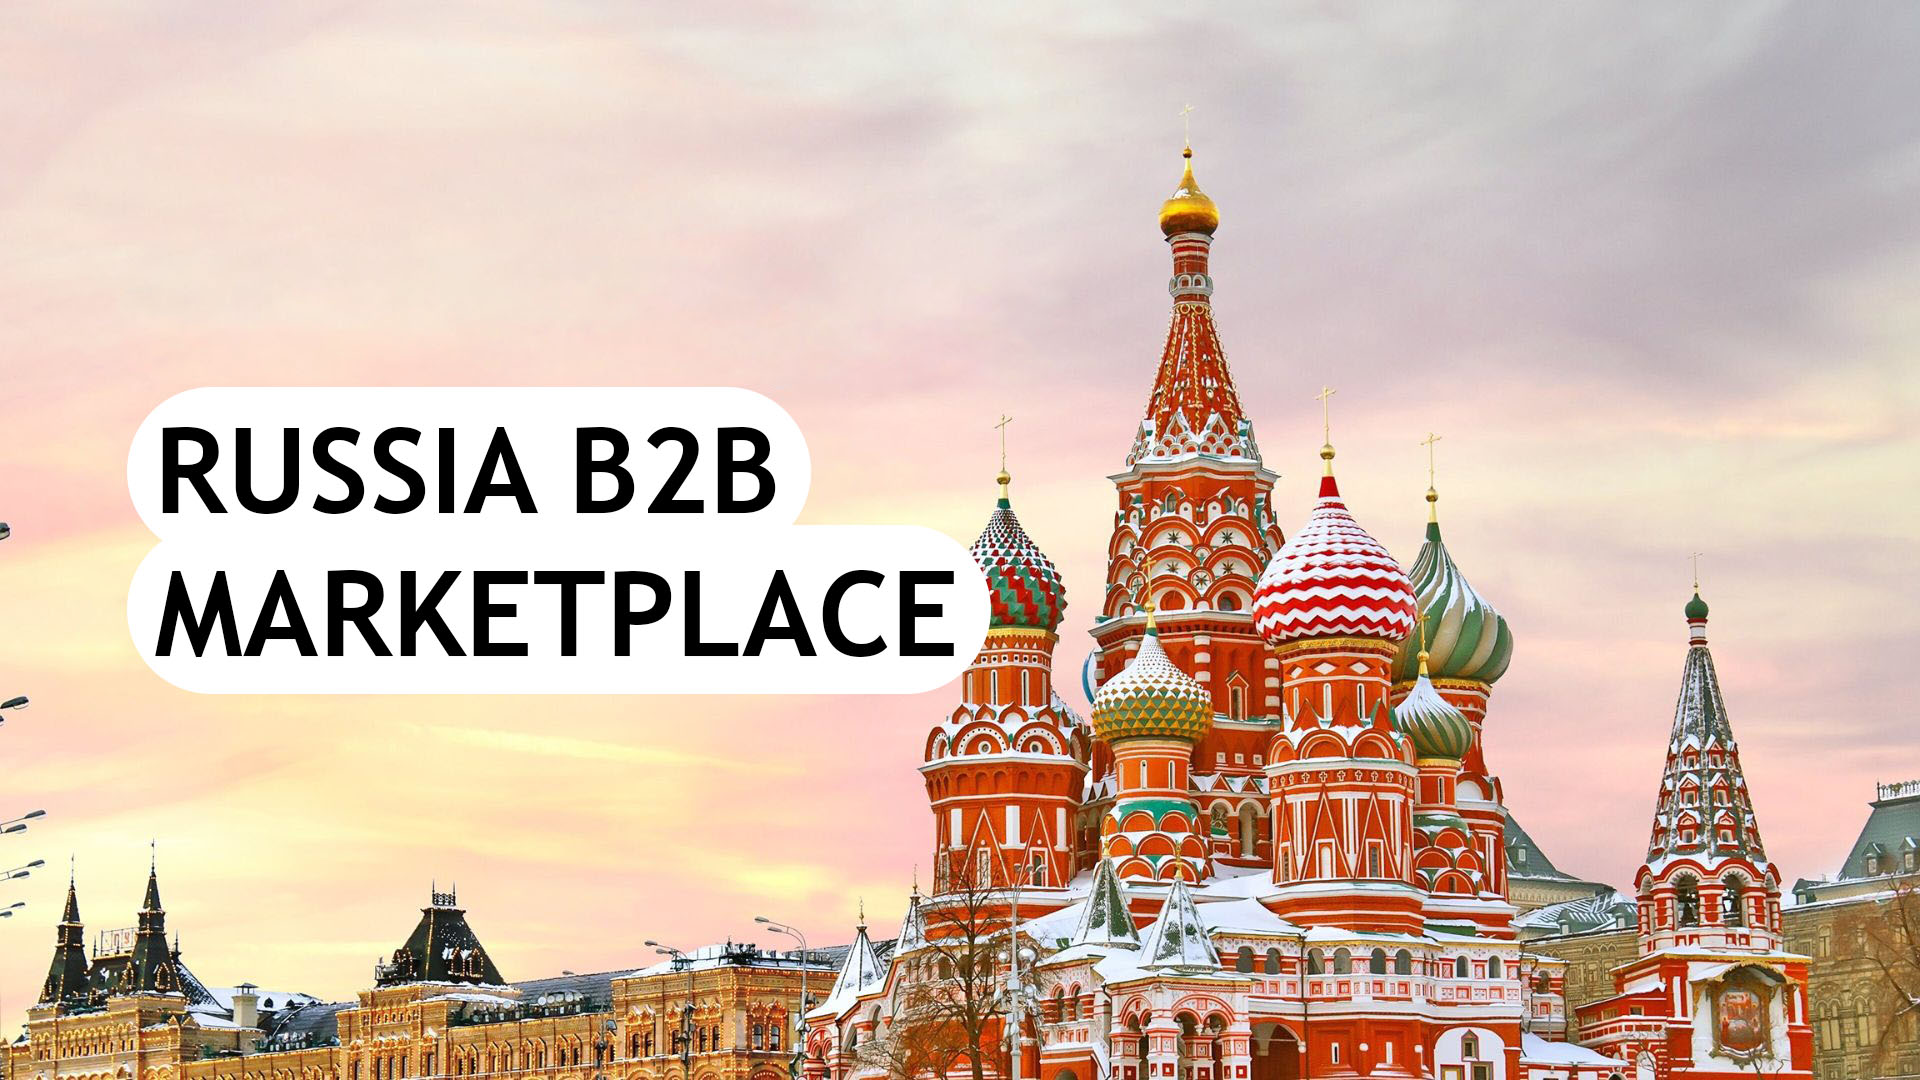 List of Top 7 Russia B2B Marketplace